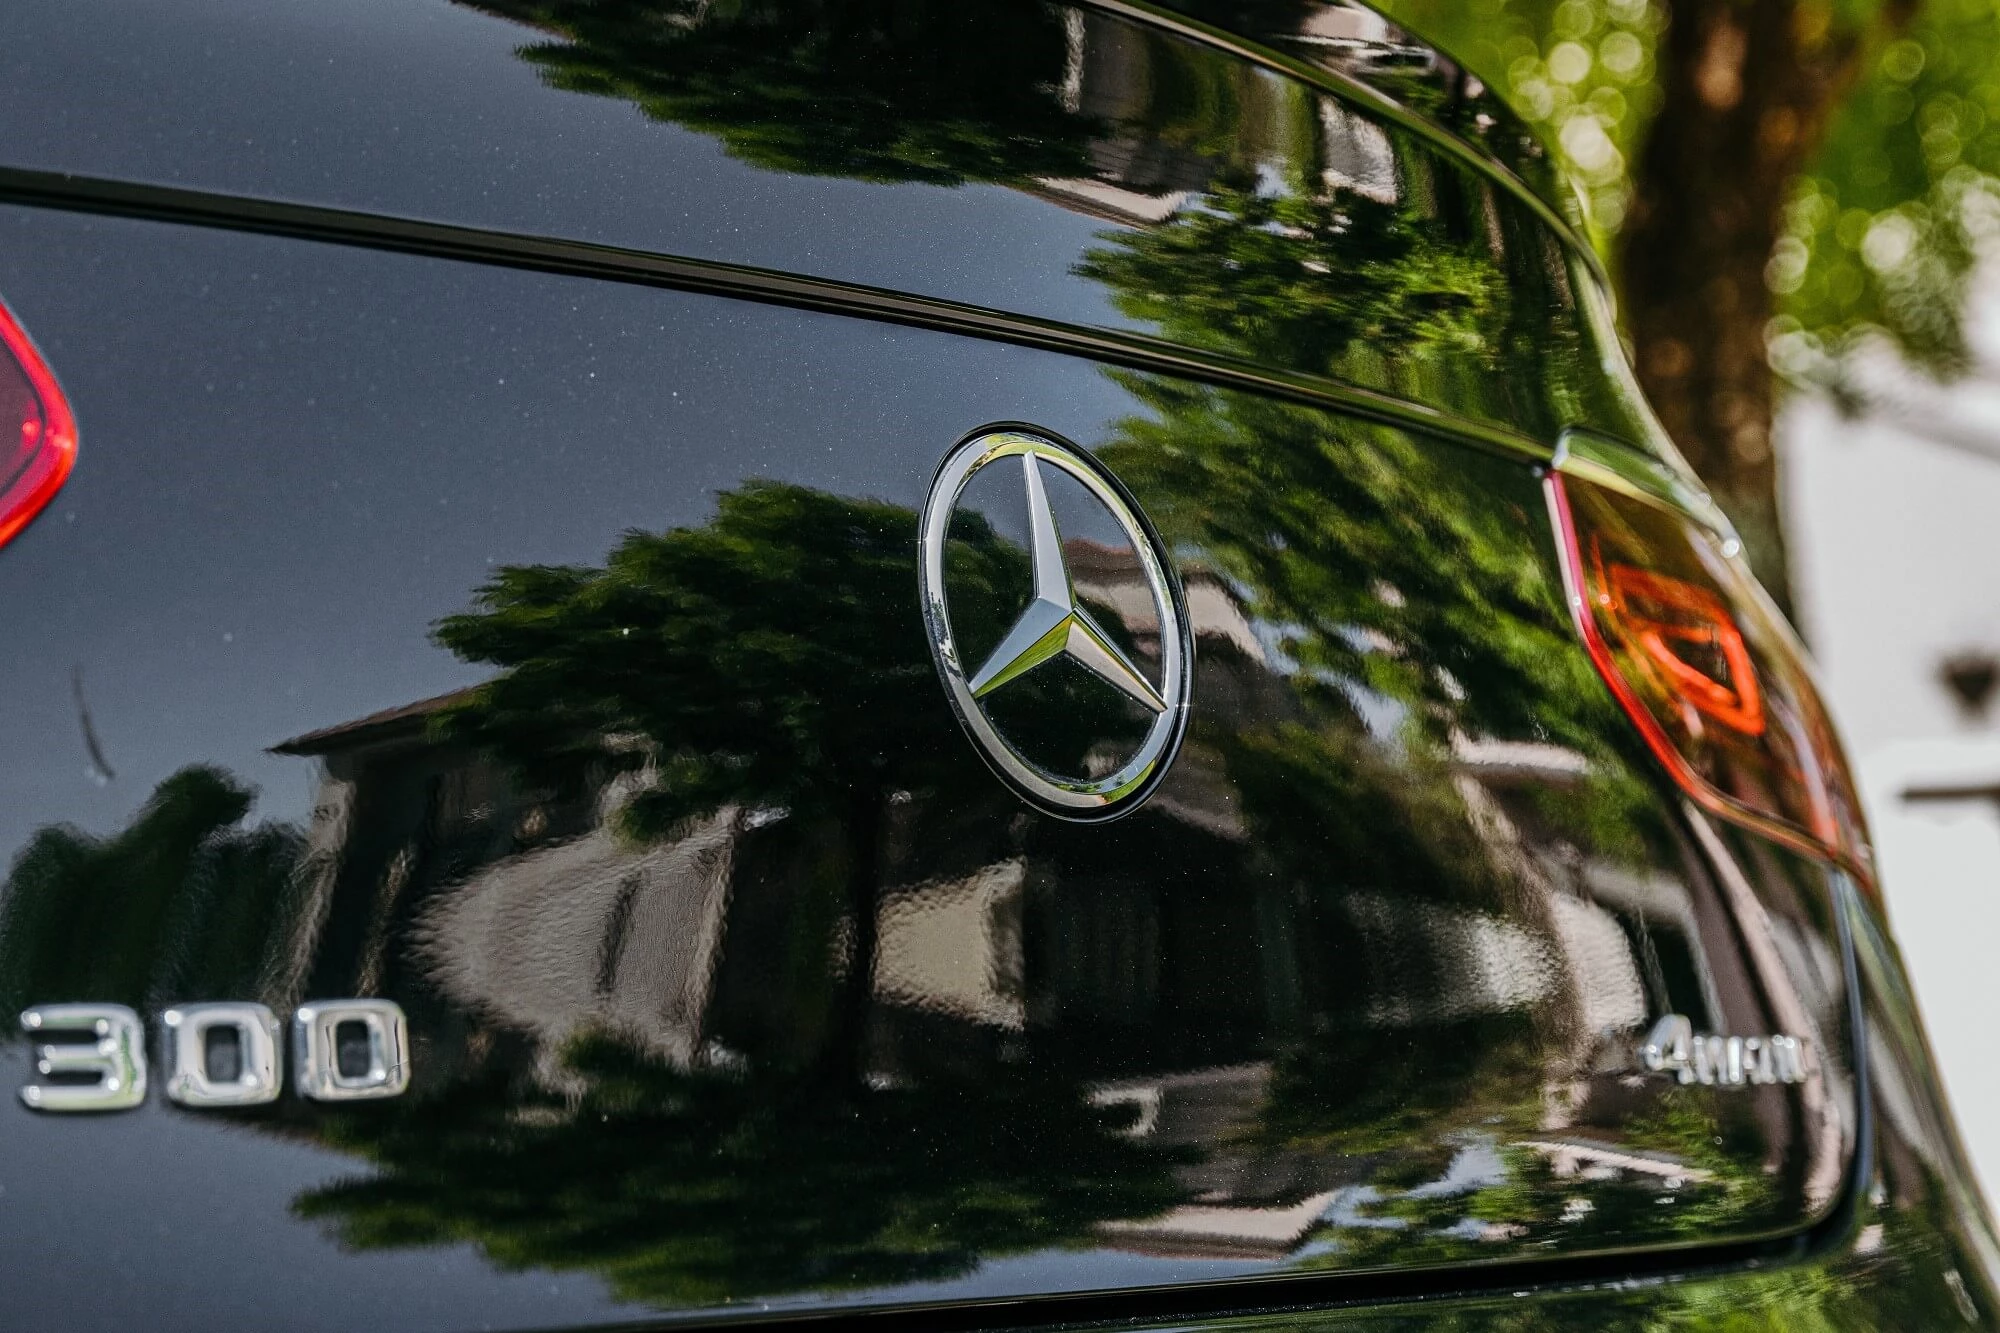 Mercedes Benz GLC Coupé Sort